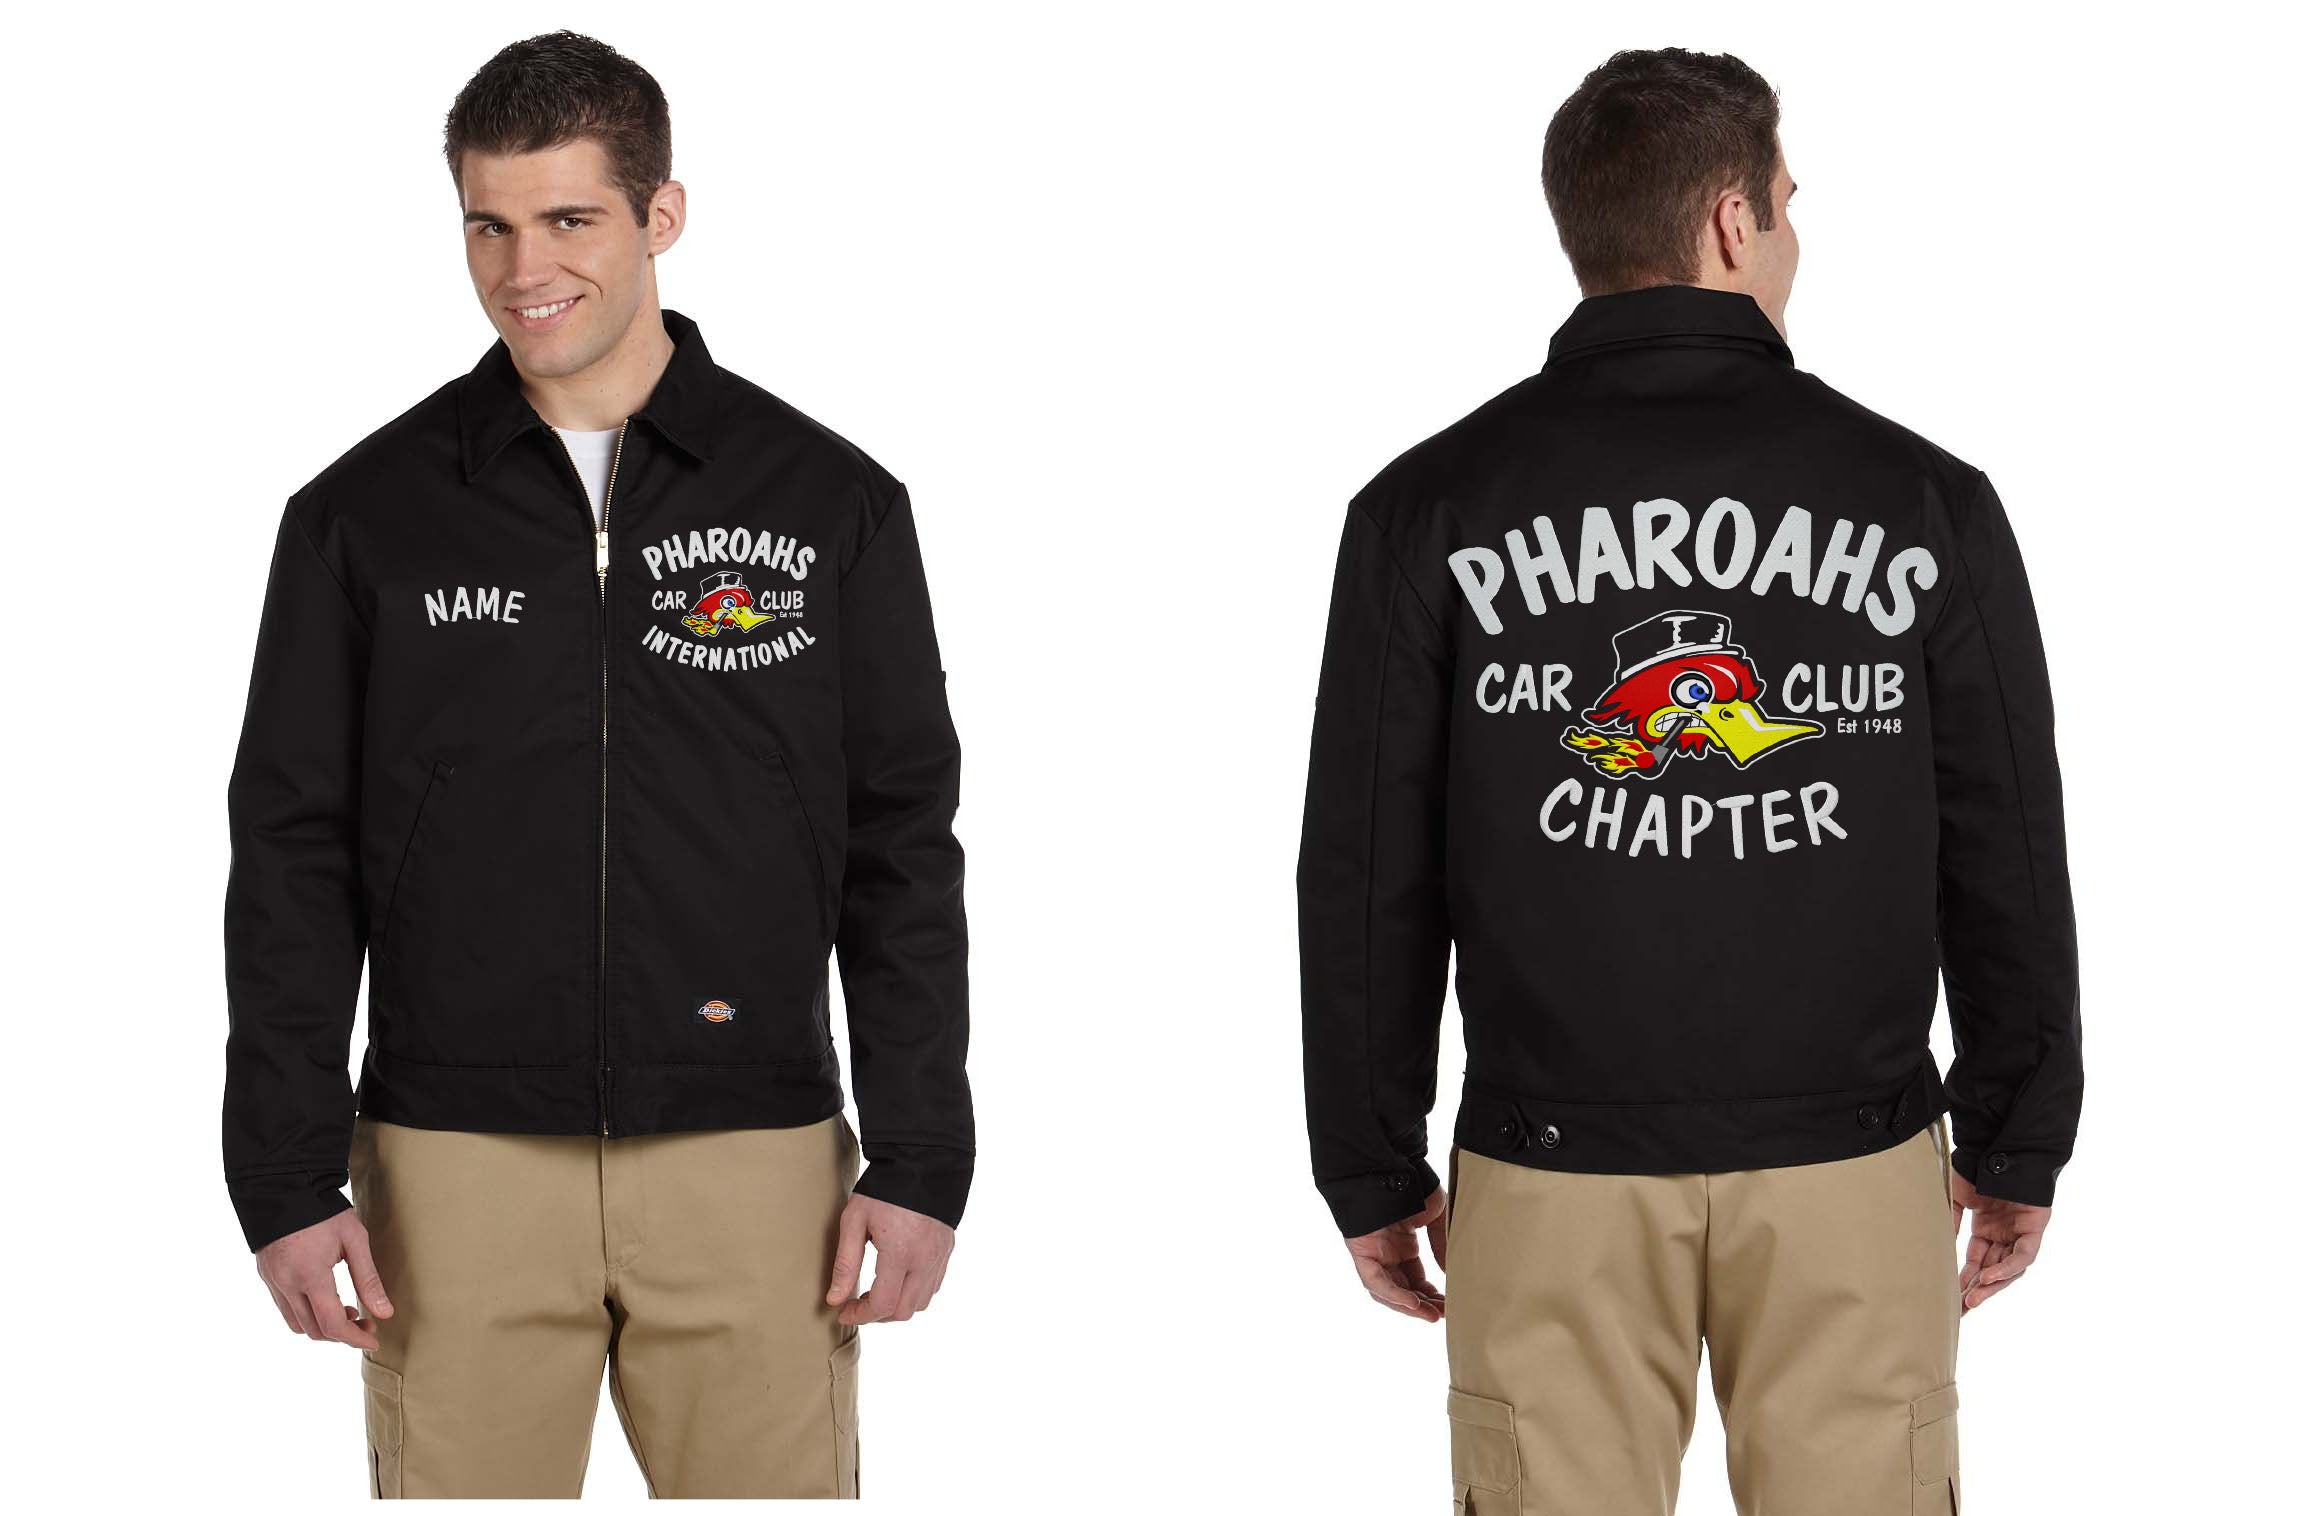 Pharoahs Car Club Eisenhower Jacket (EMBROIDERED)